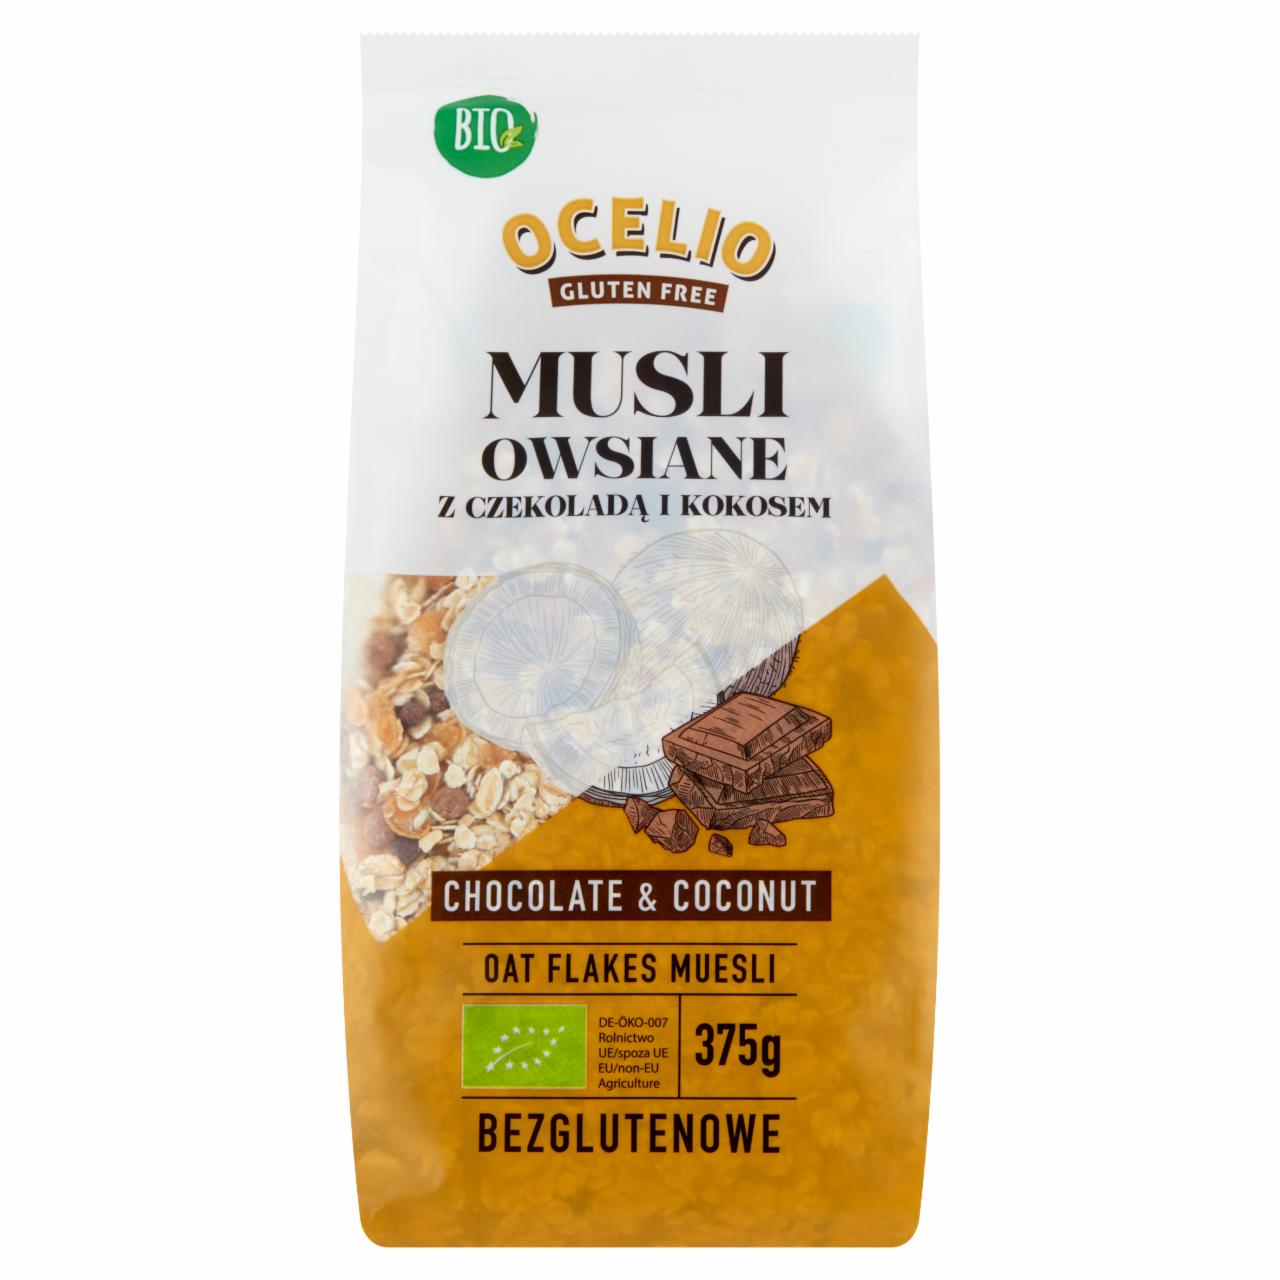 Photo - Ocelio Bio Gluten Free with Chocolate & Coconut Oat Flakes Muesli 375 g